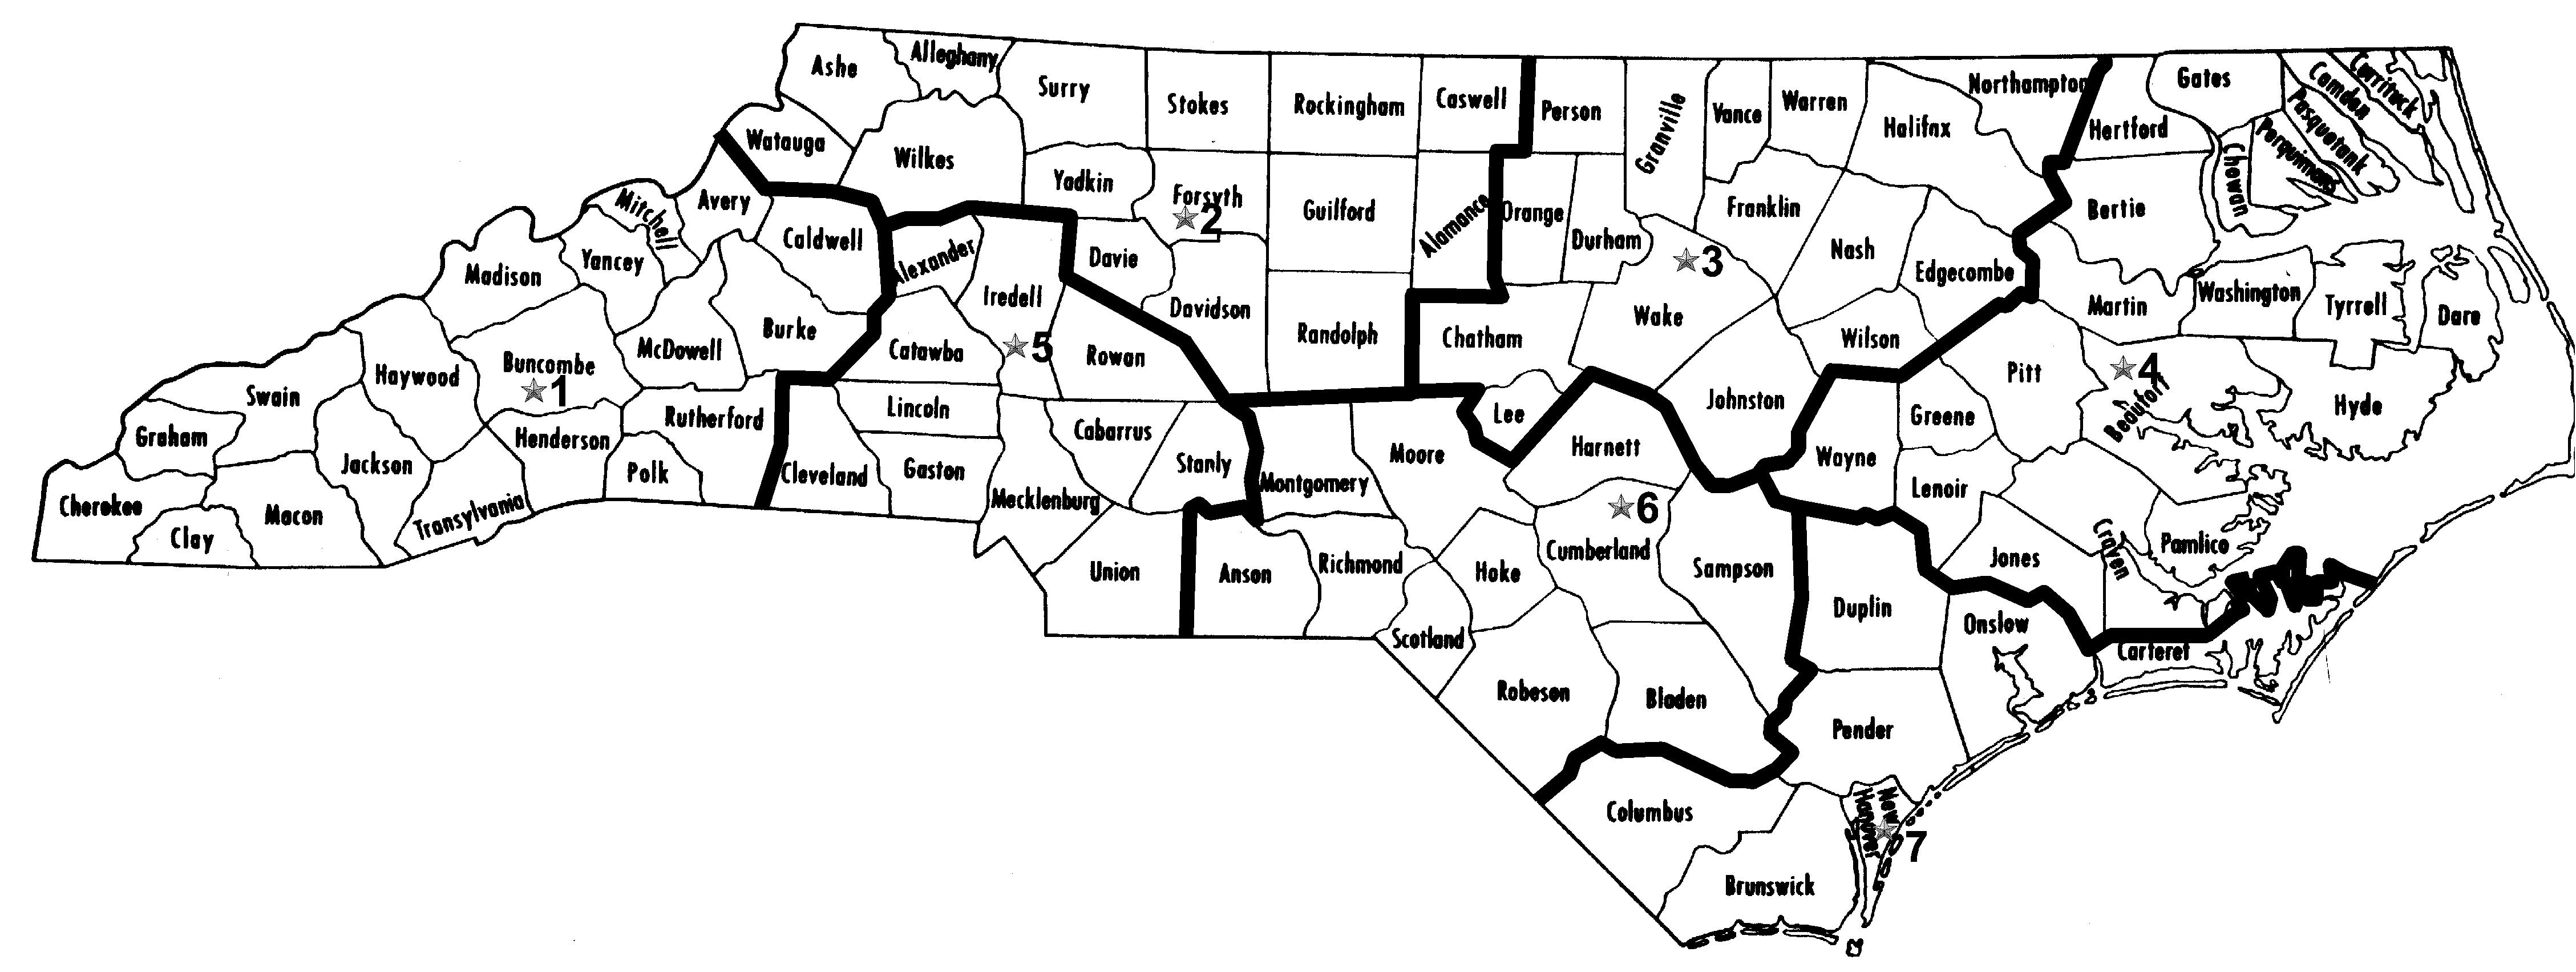 Labeled Map of North Carolina